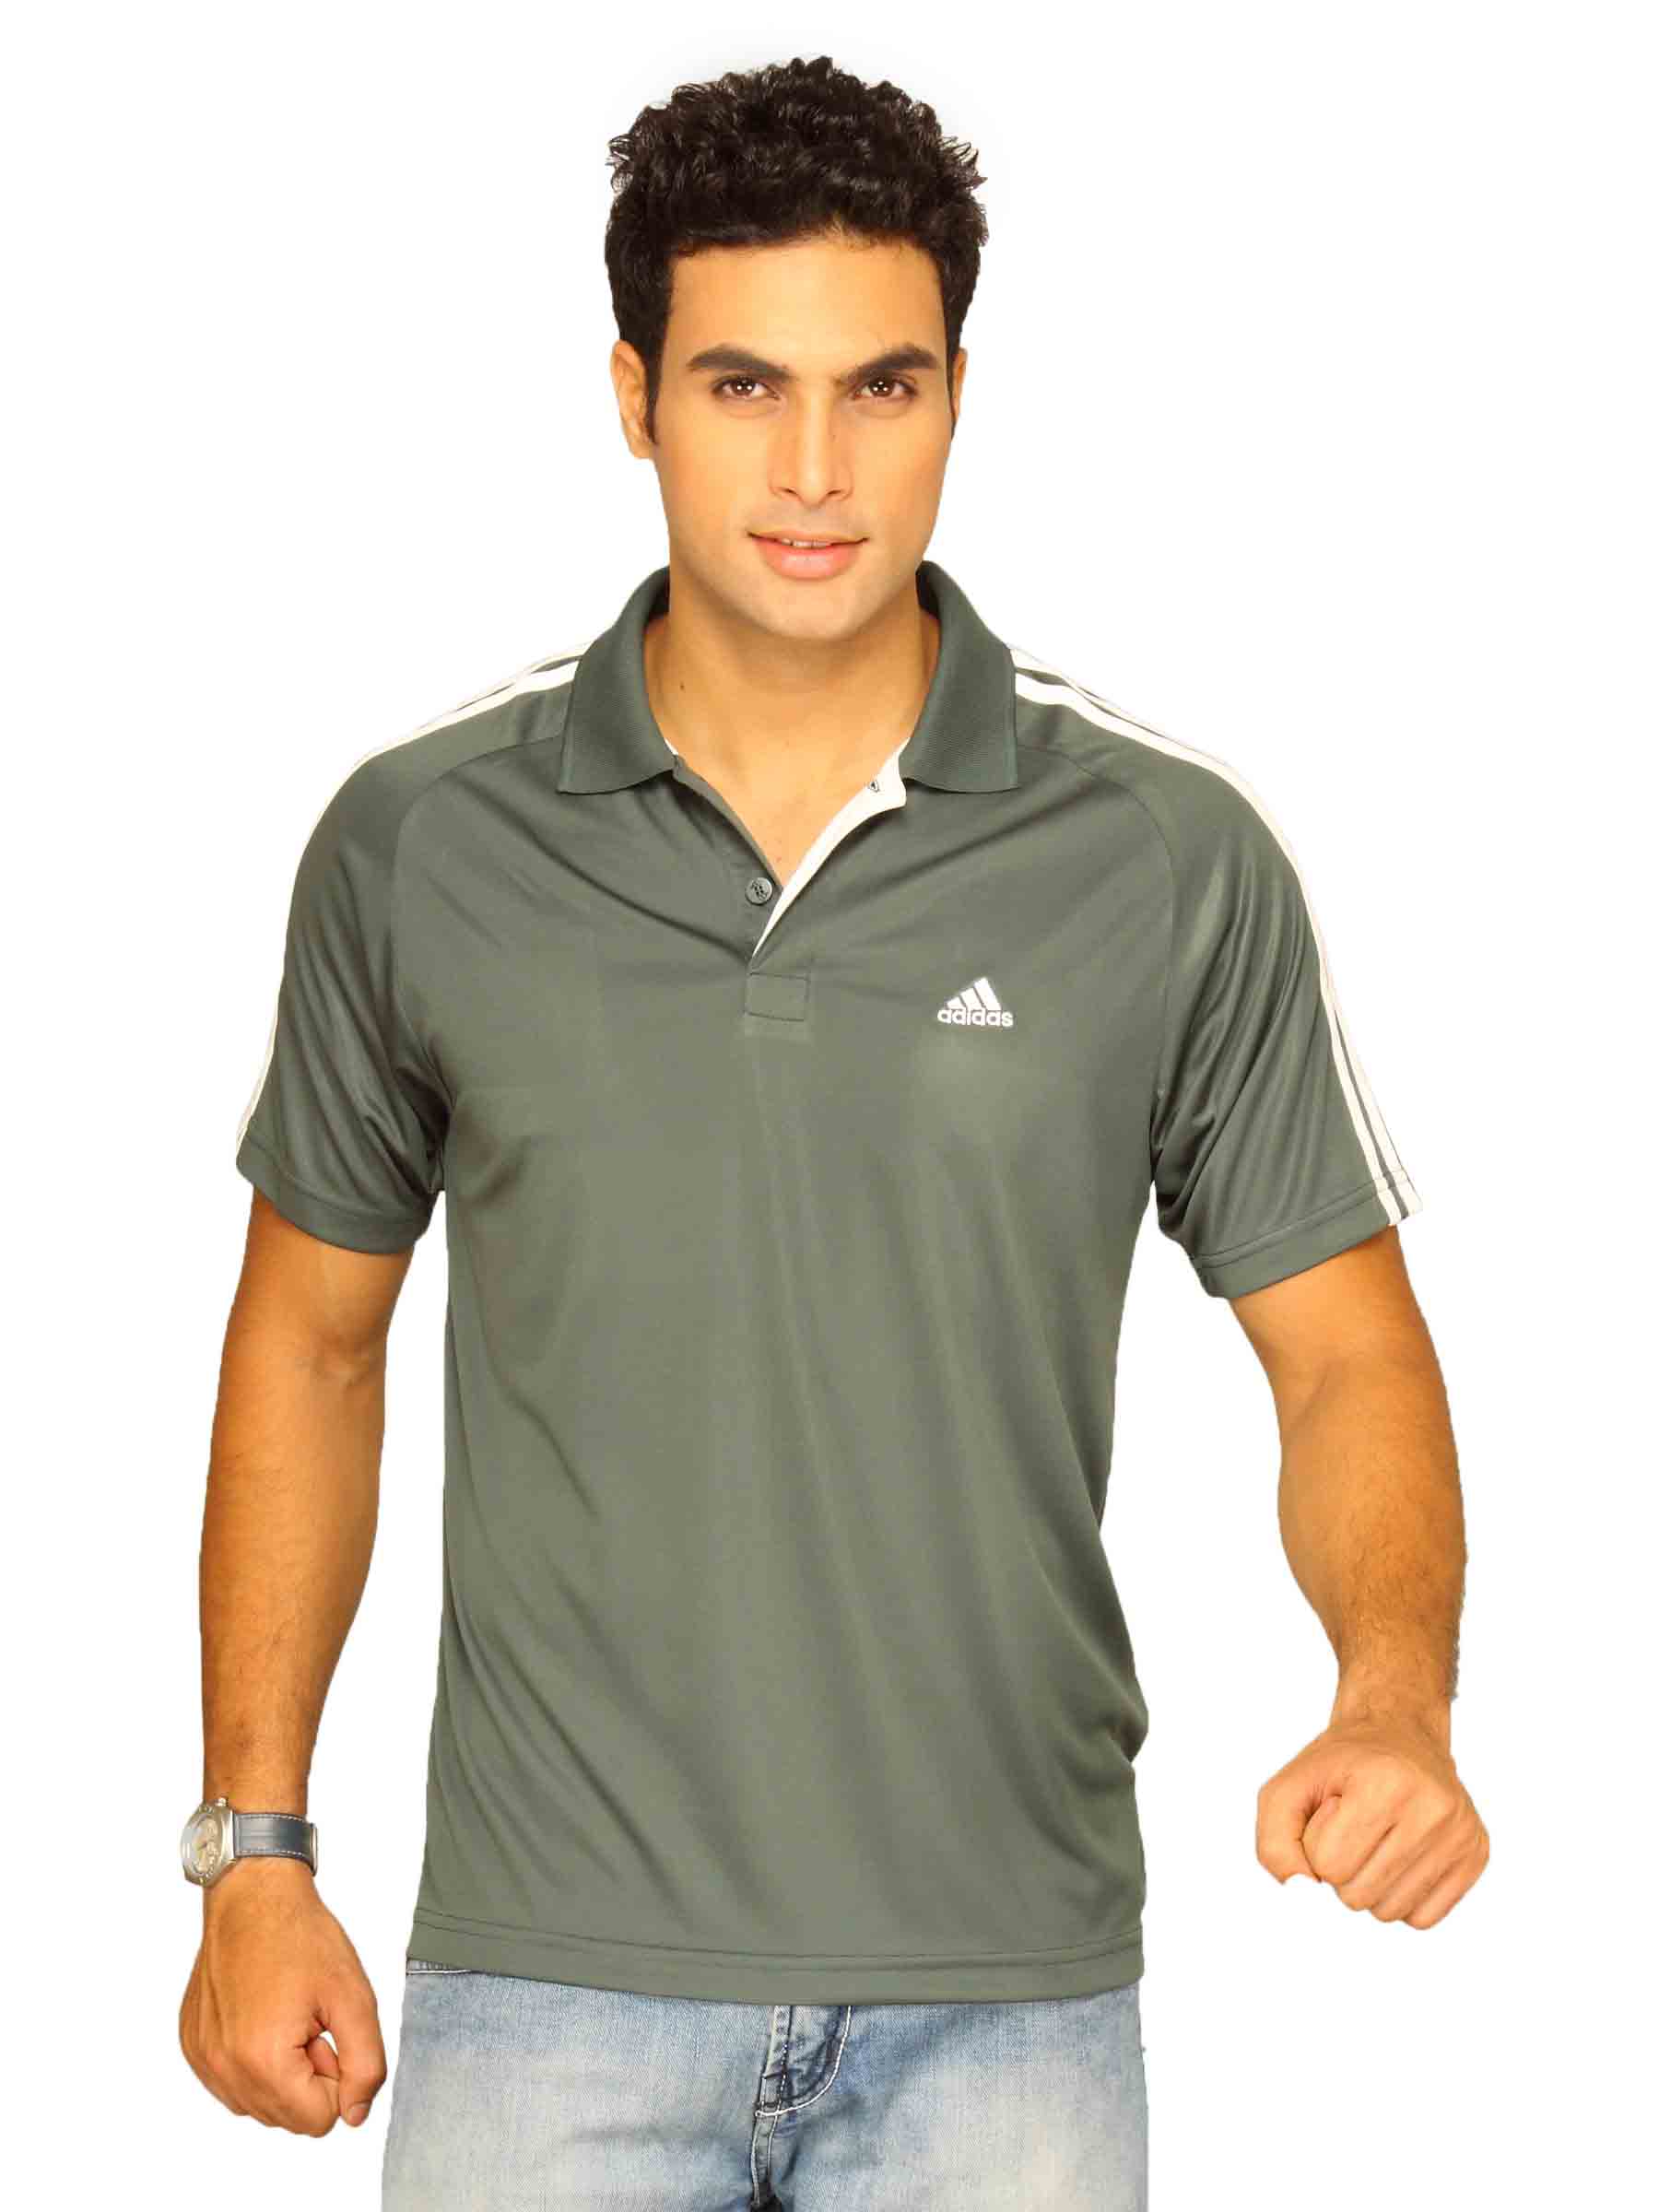 ADIDAS Men's 3S PES Grey Polo T-shirt